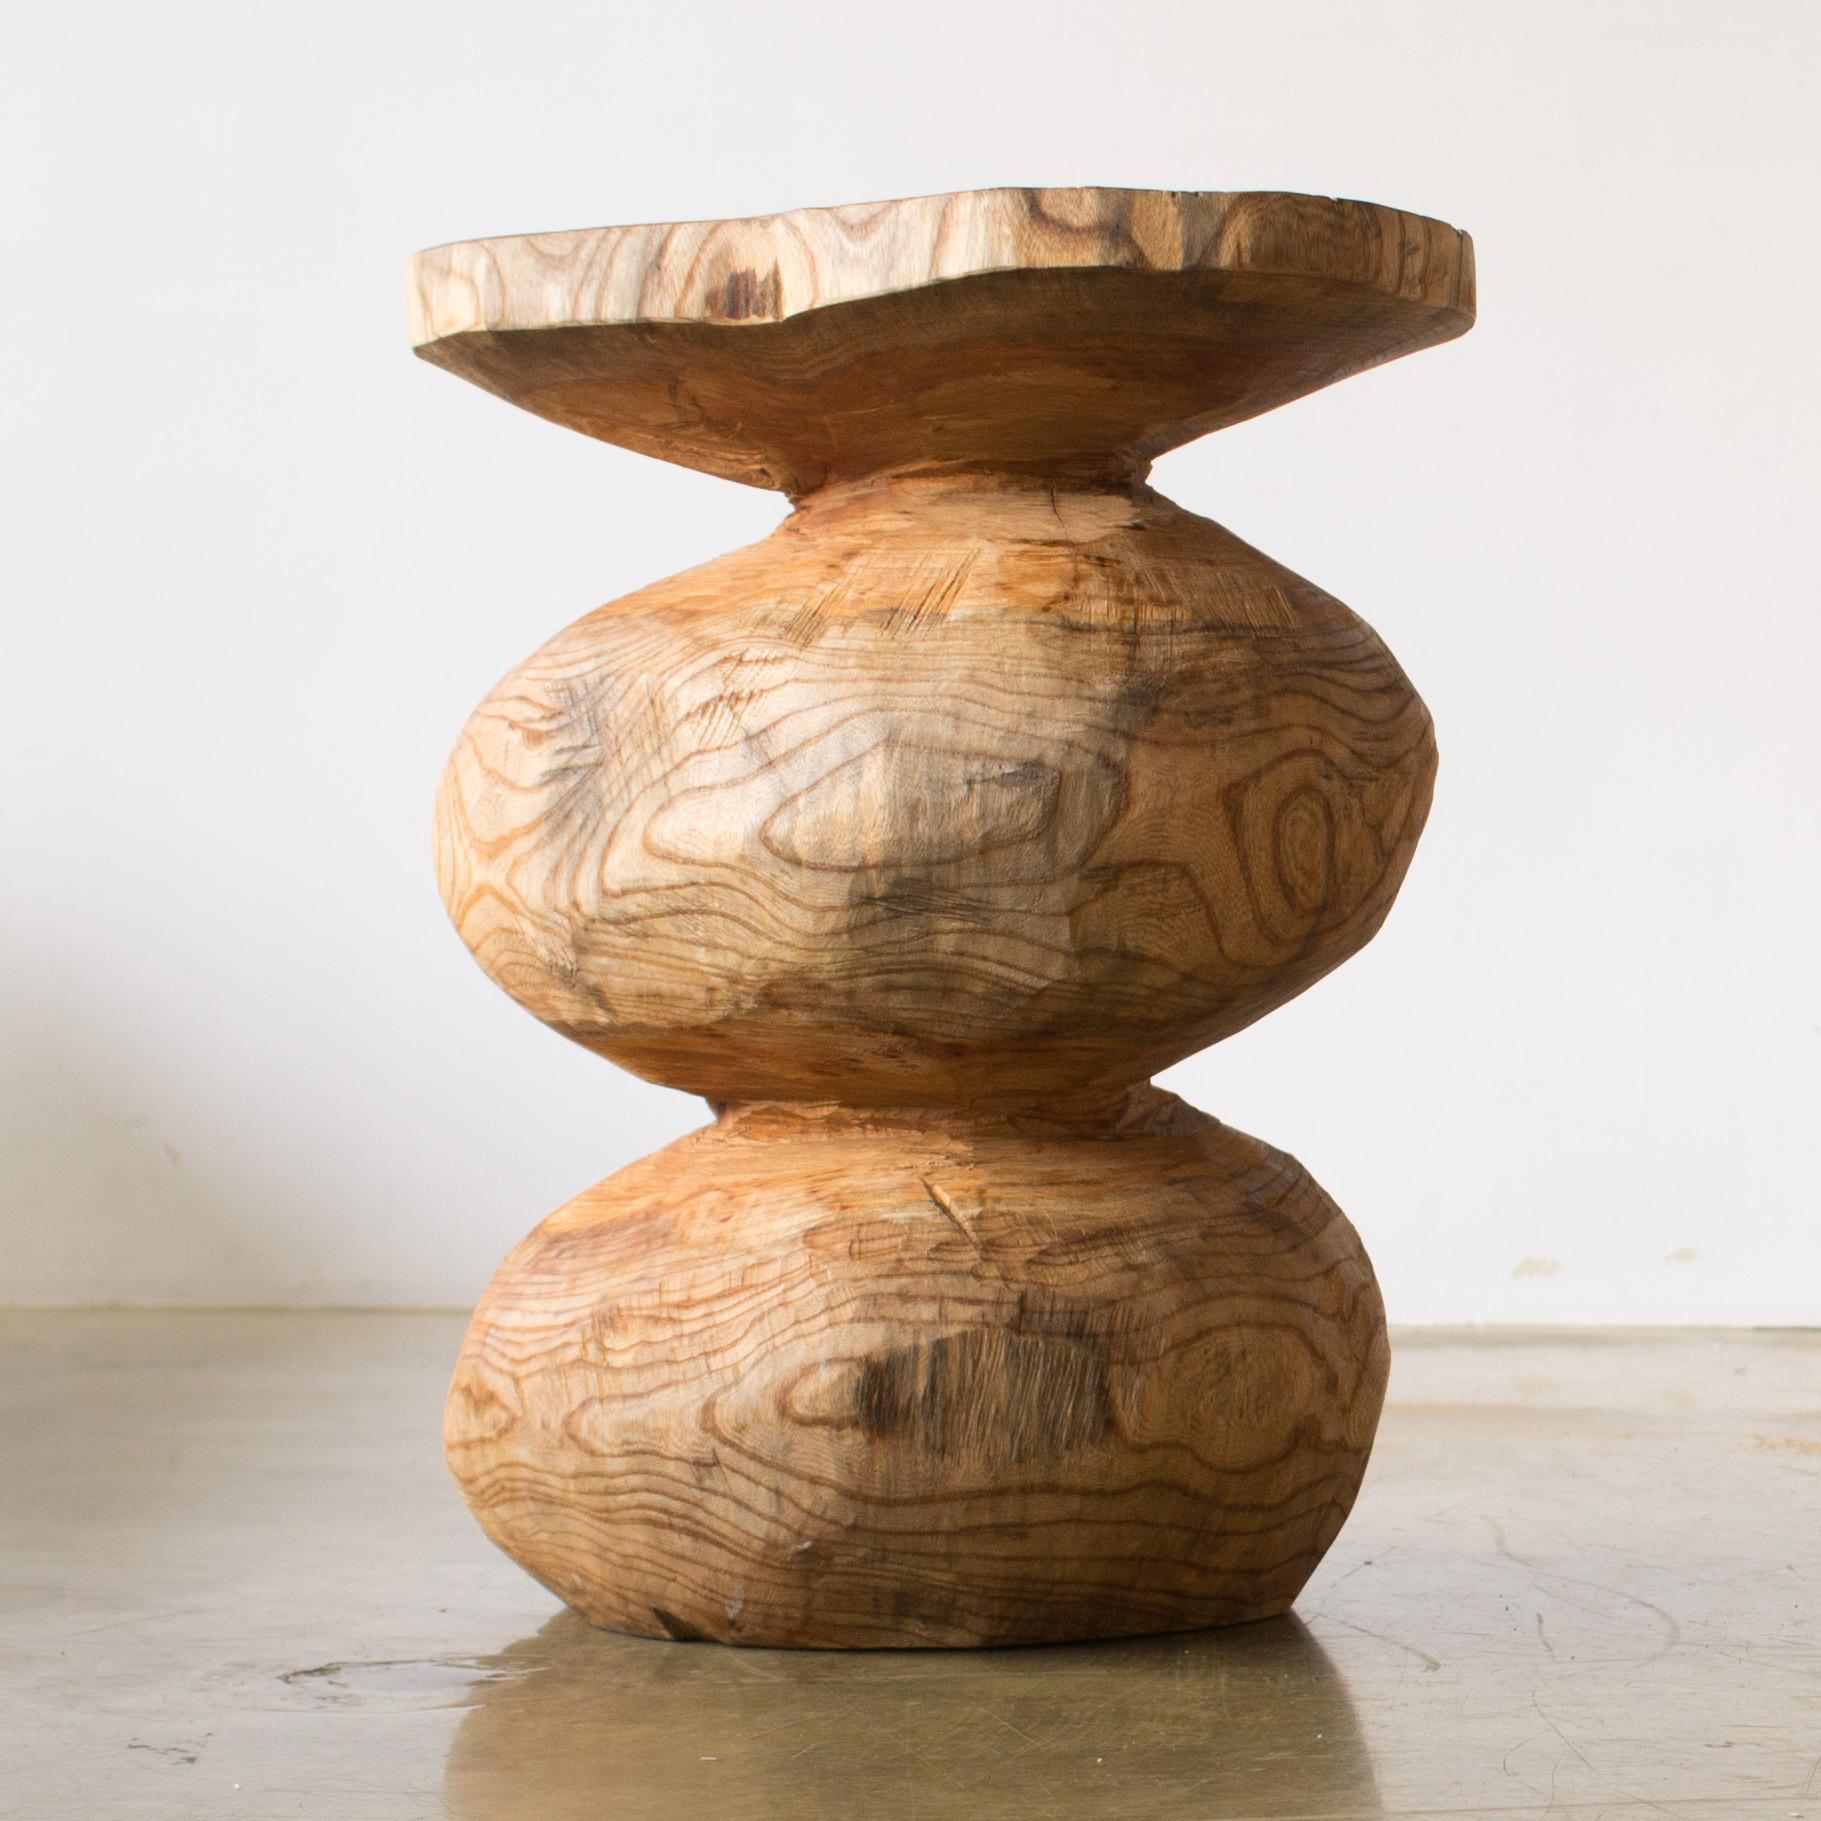 Japanese Hiroyuki Nishimura Furniture Sculptural Wood Stool10-06 Tribal Glamping